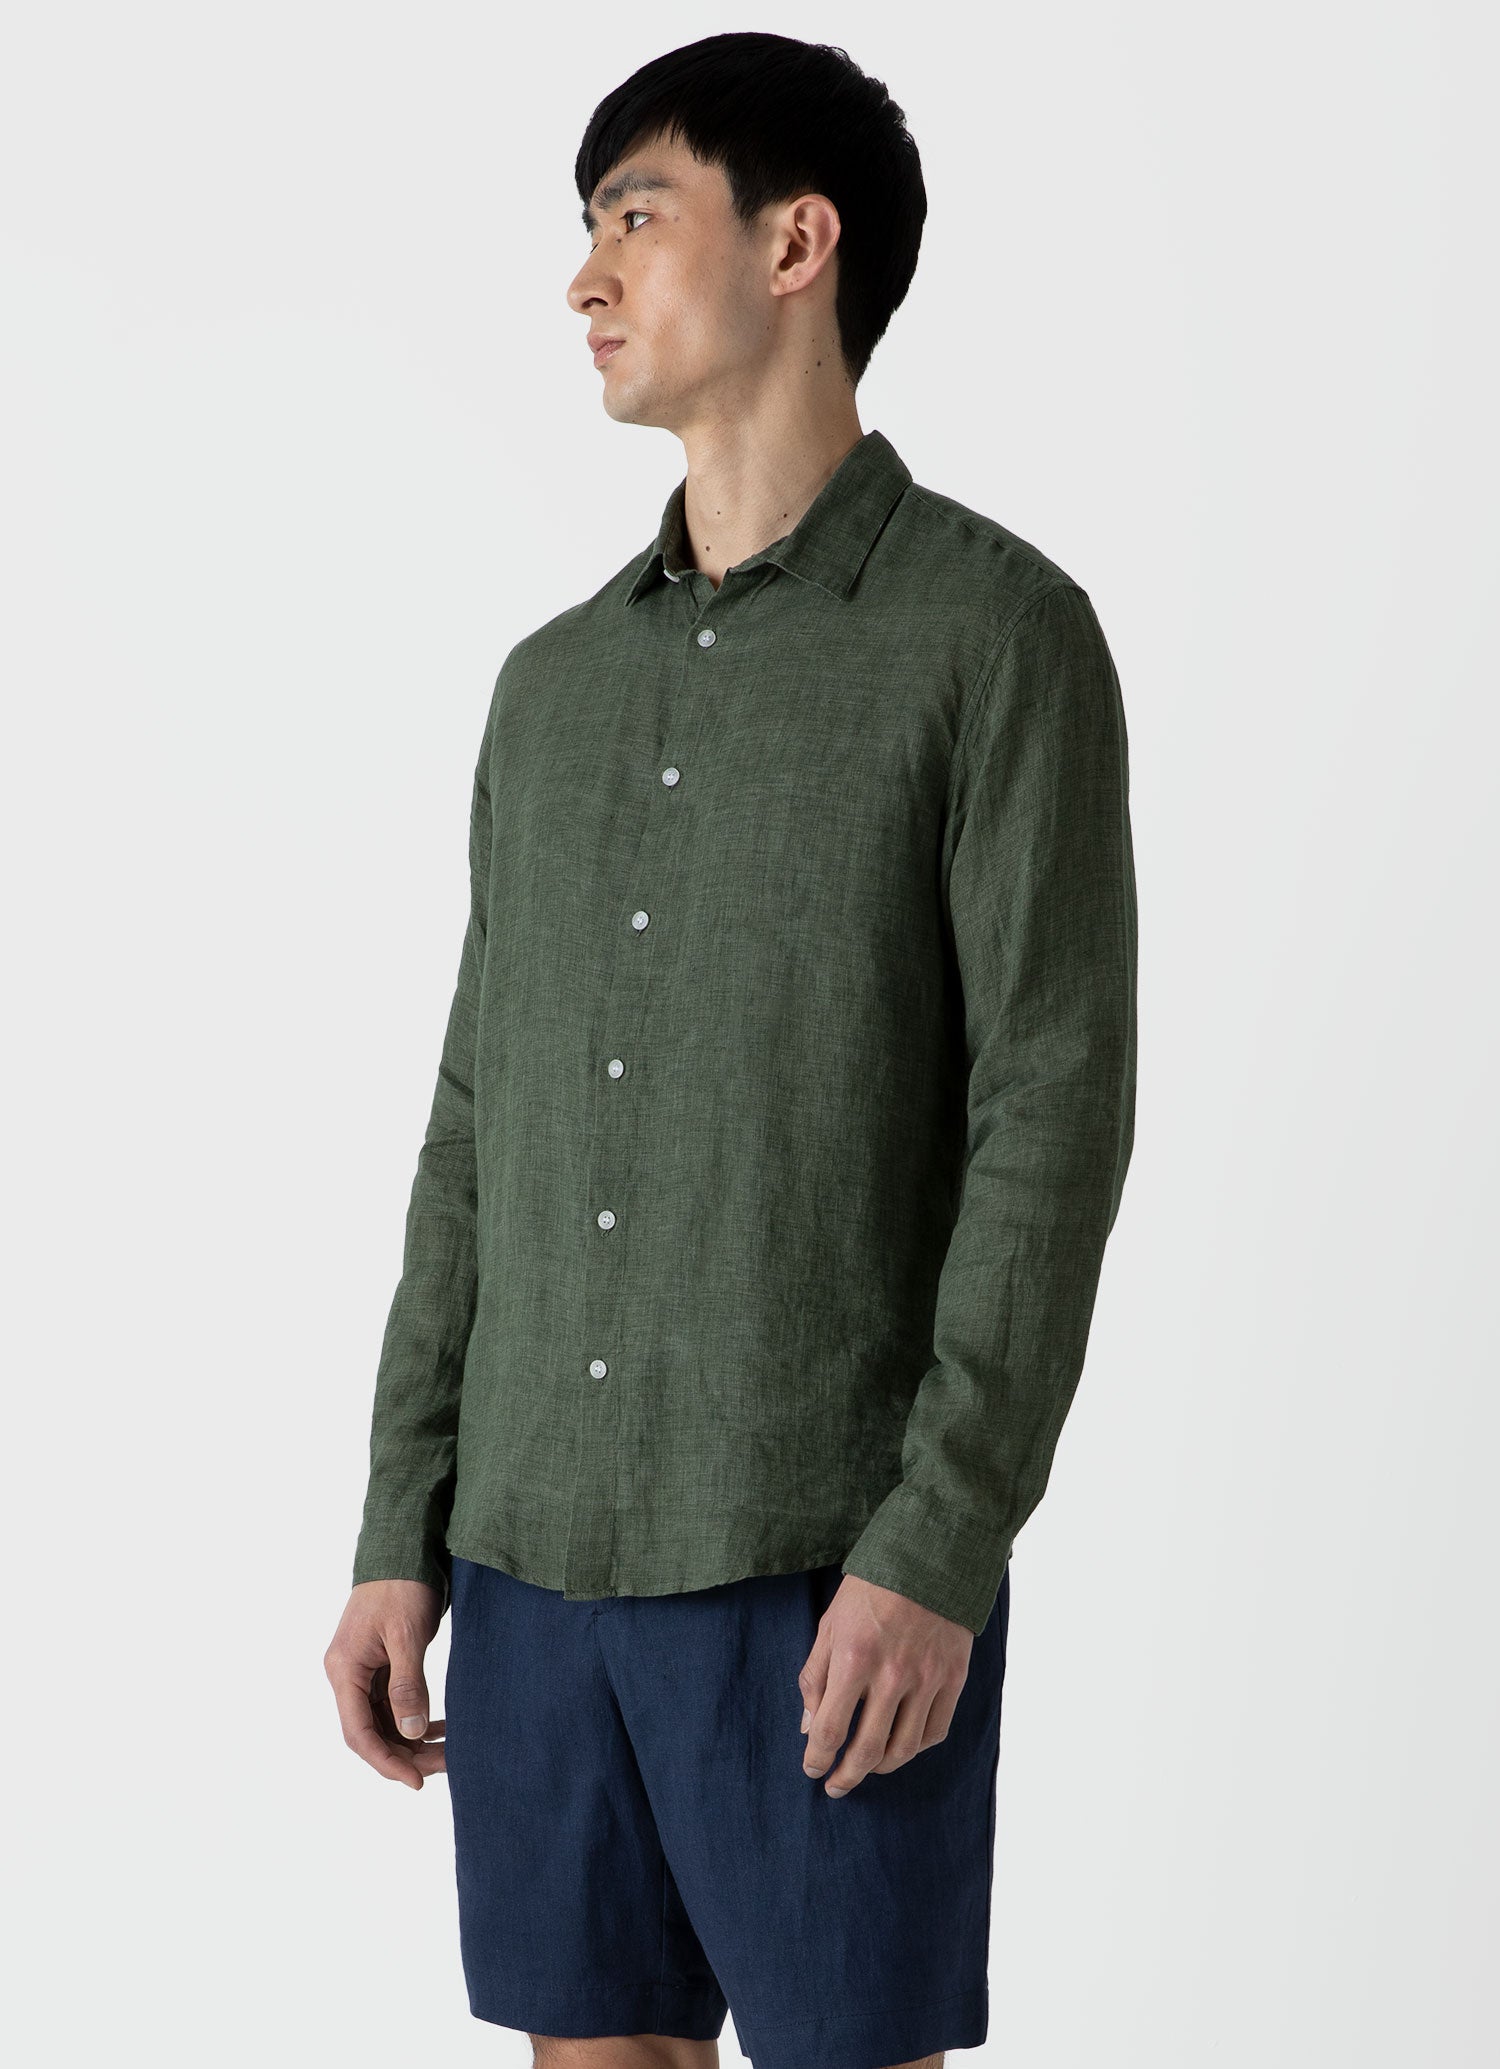 Men's Linen Shirt in Hunter Green